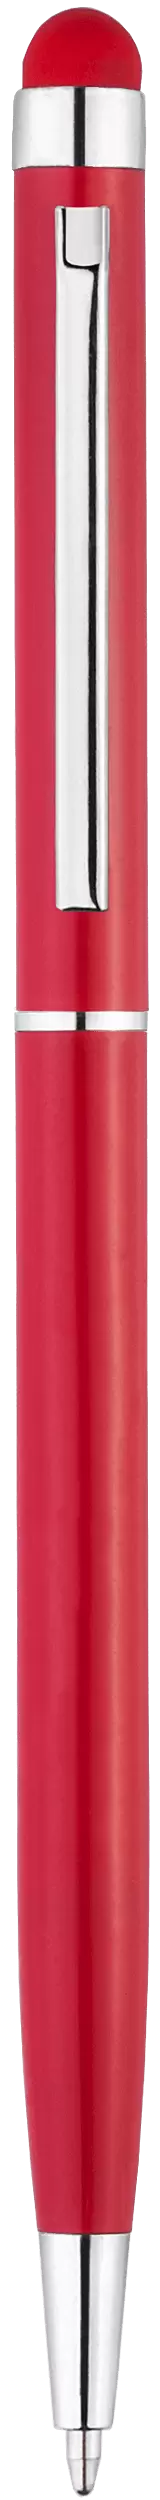 Ручка KENO Красная NEW 1117-03